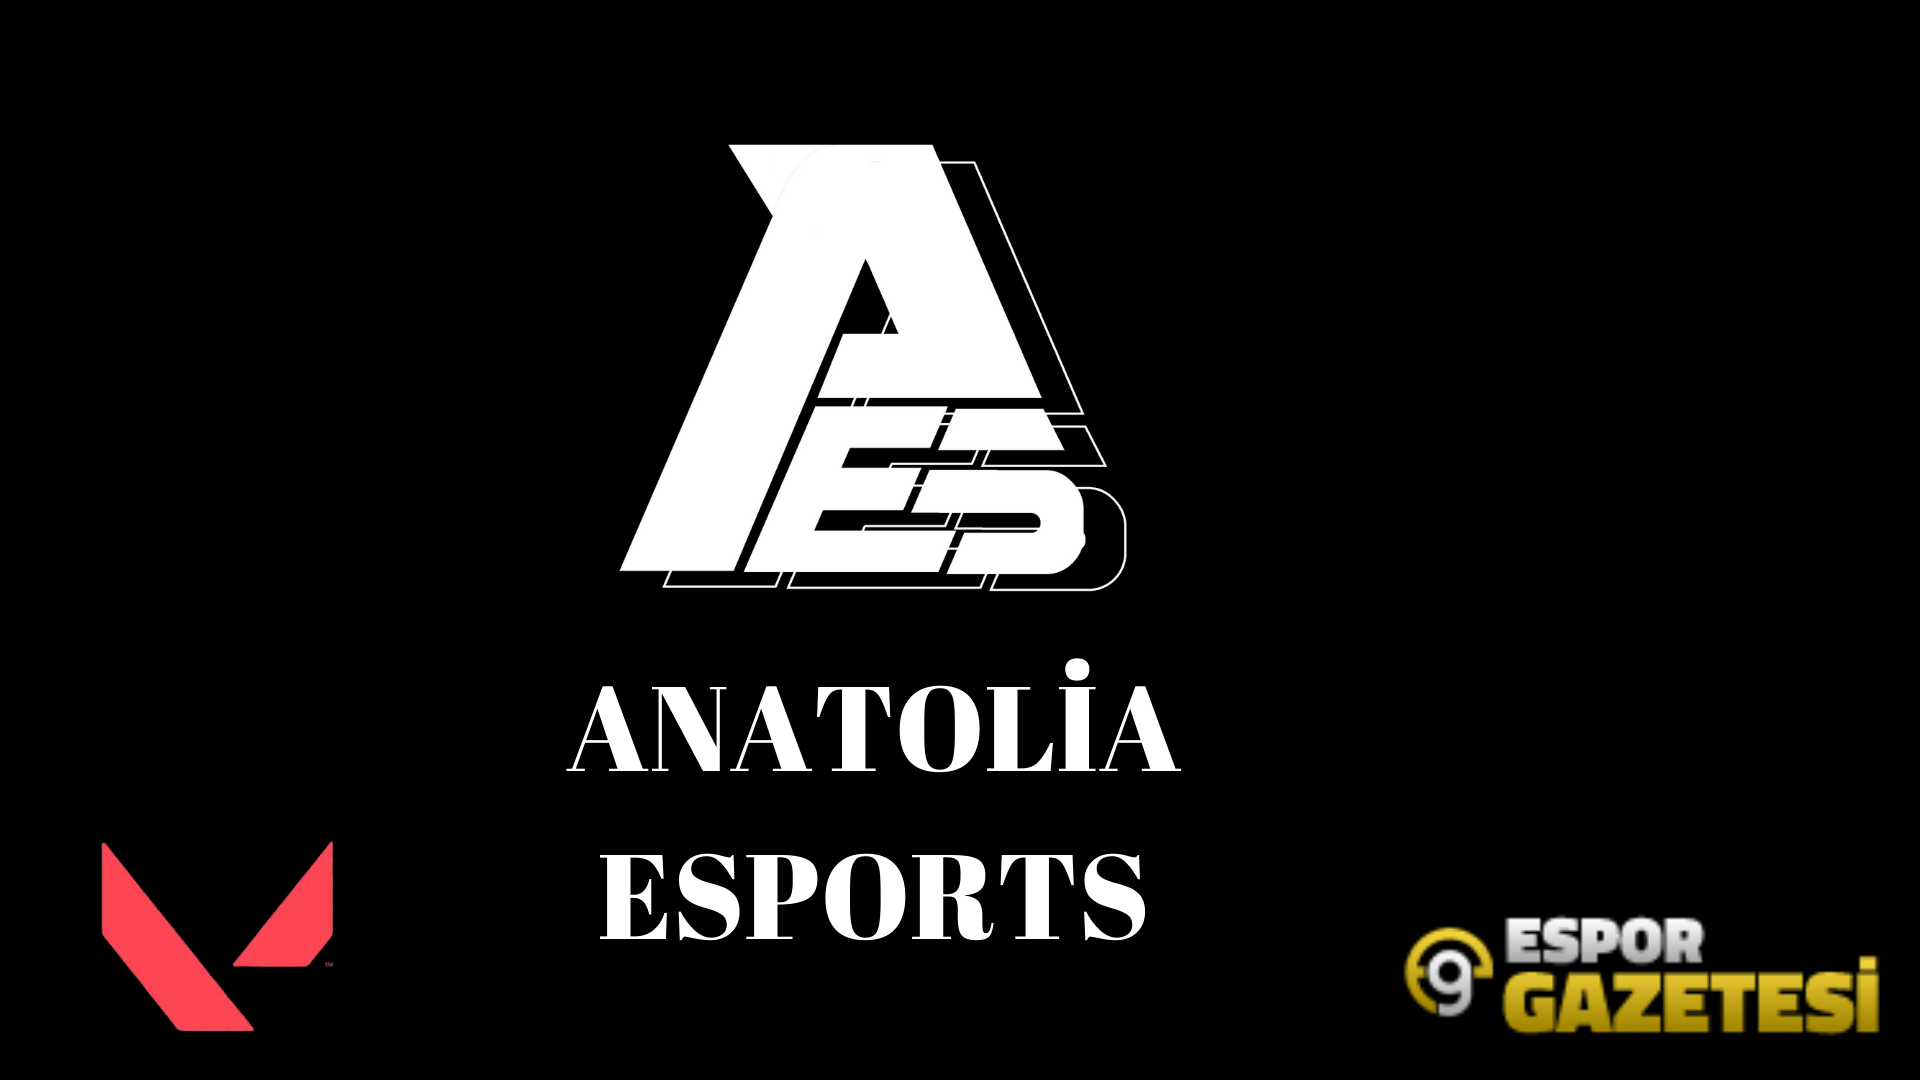 Anatolia Esports